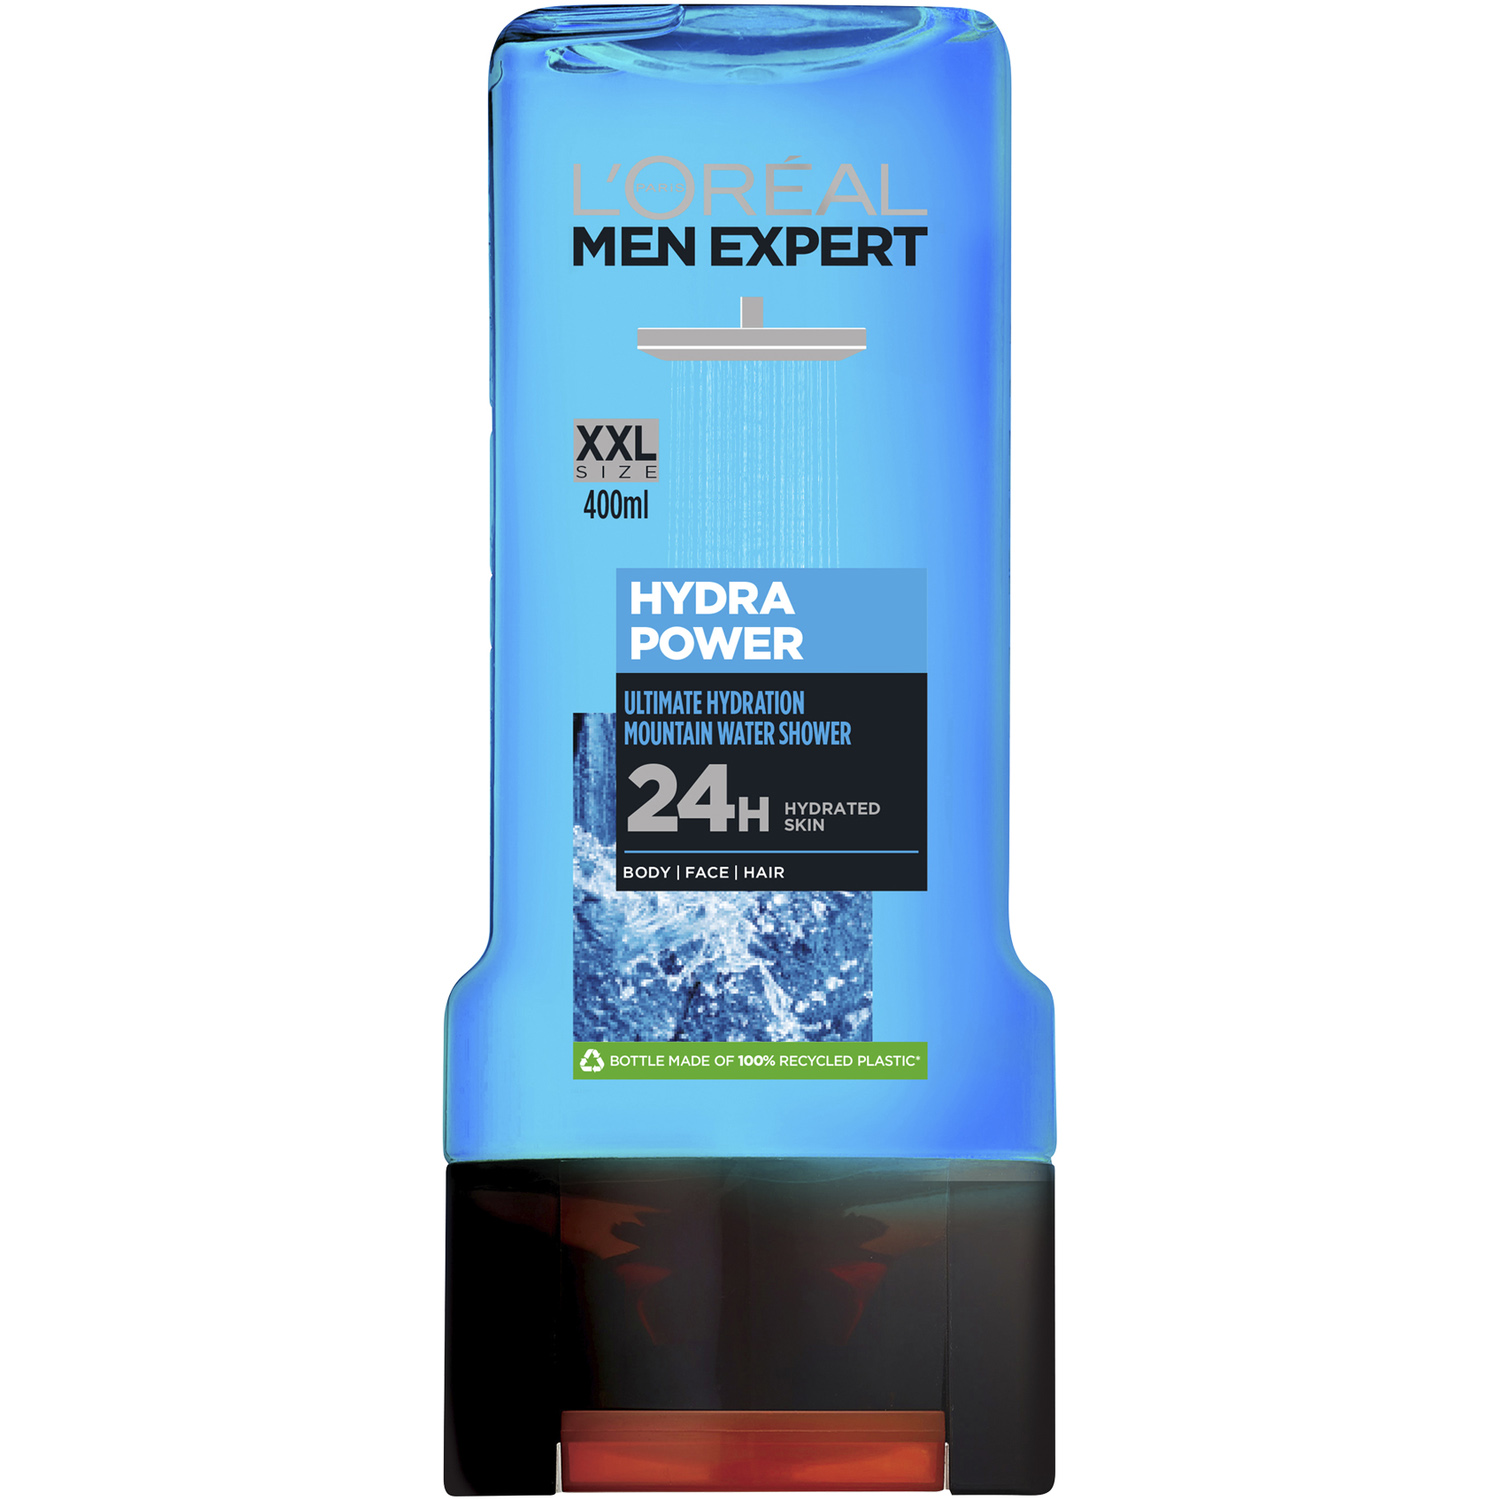 L'Oreal Paris Men Expert Hydra Power Shower Gel 400ml Image